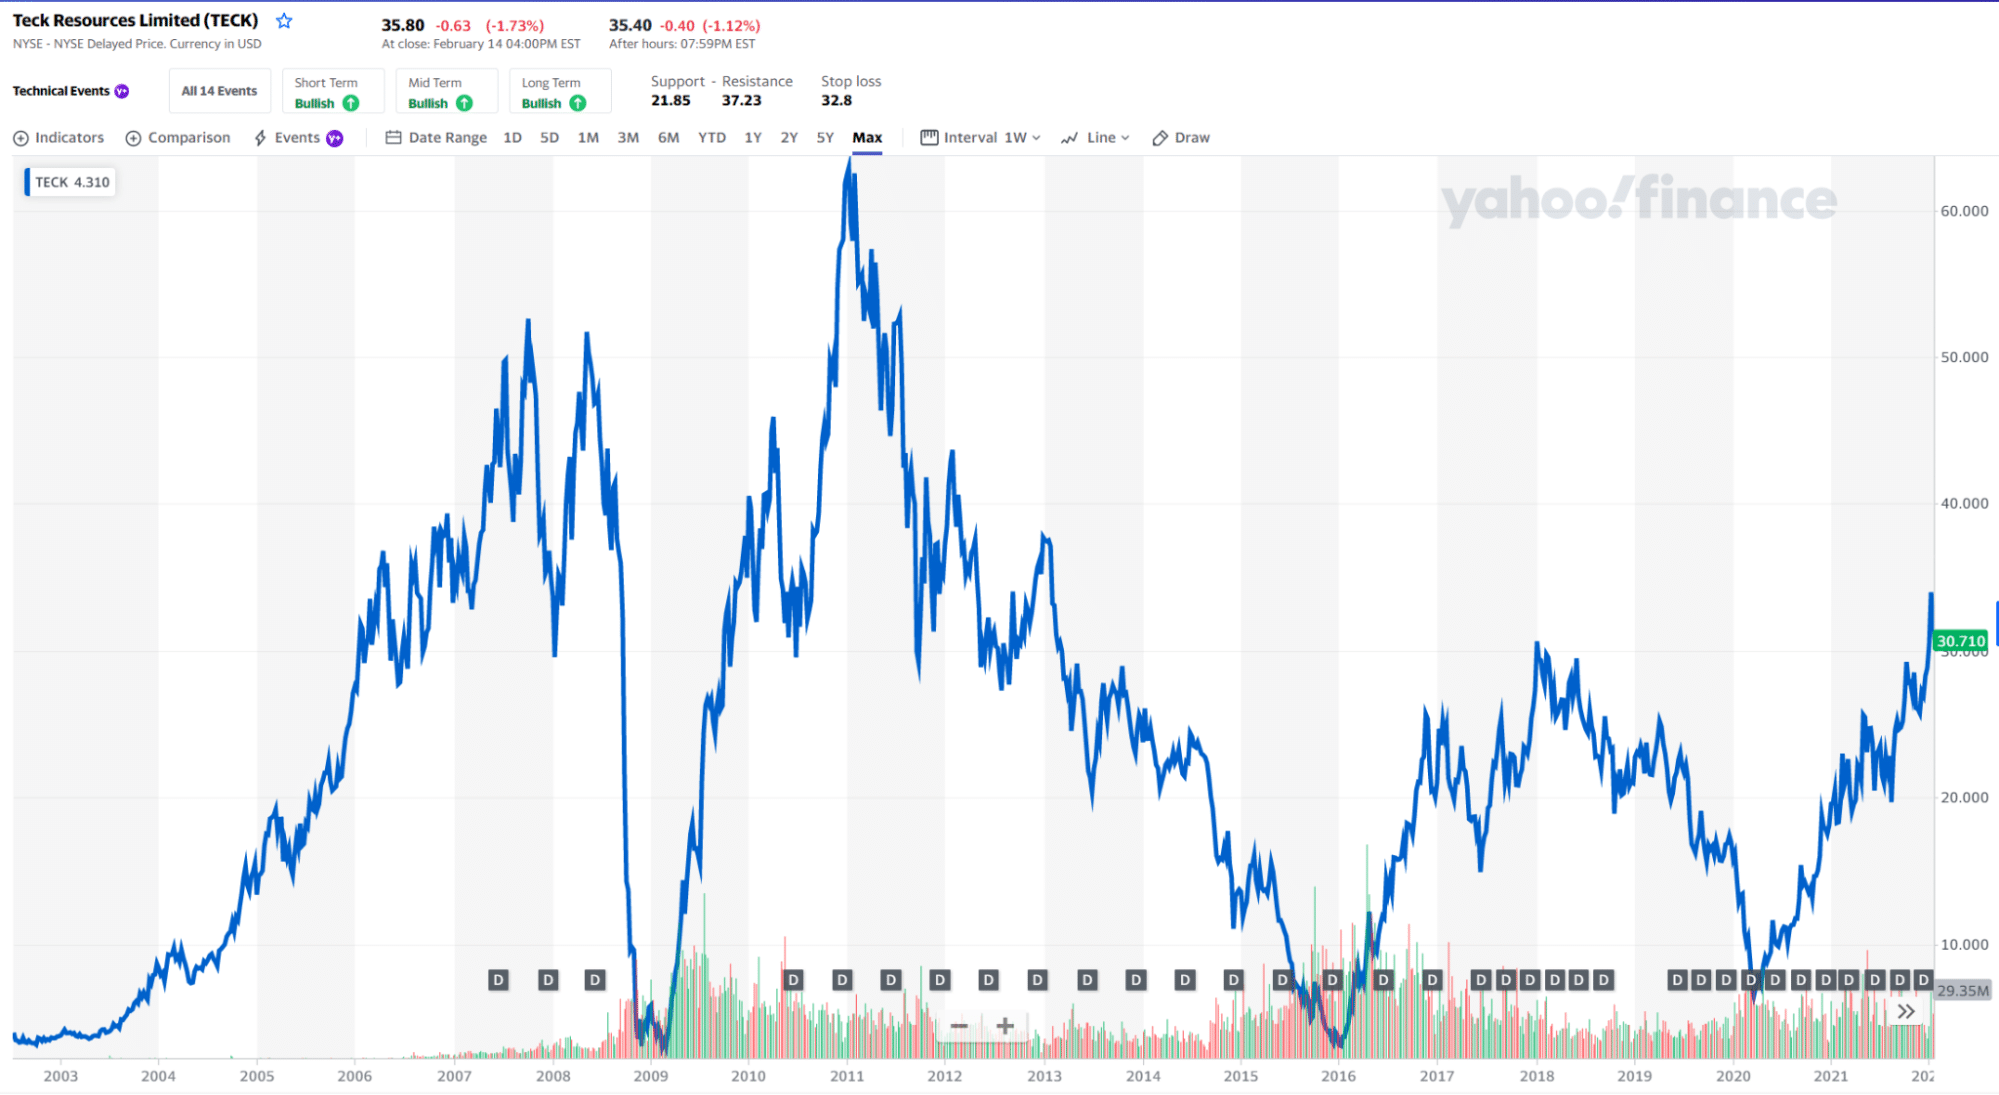 TECK stock price chart 2003-2022